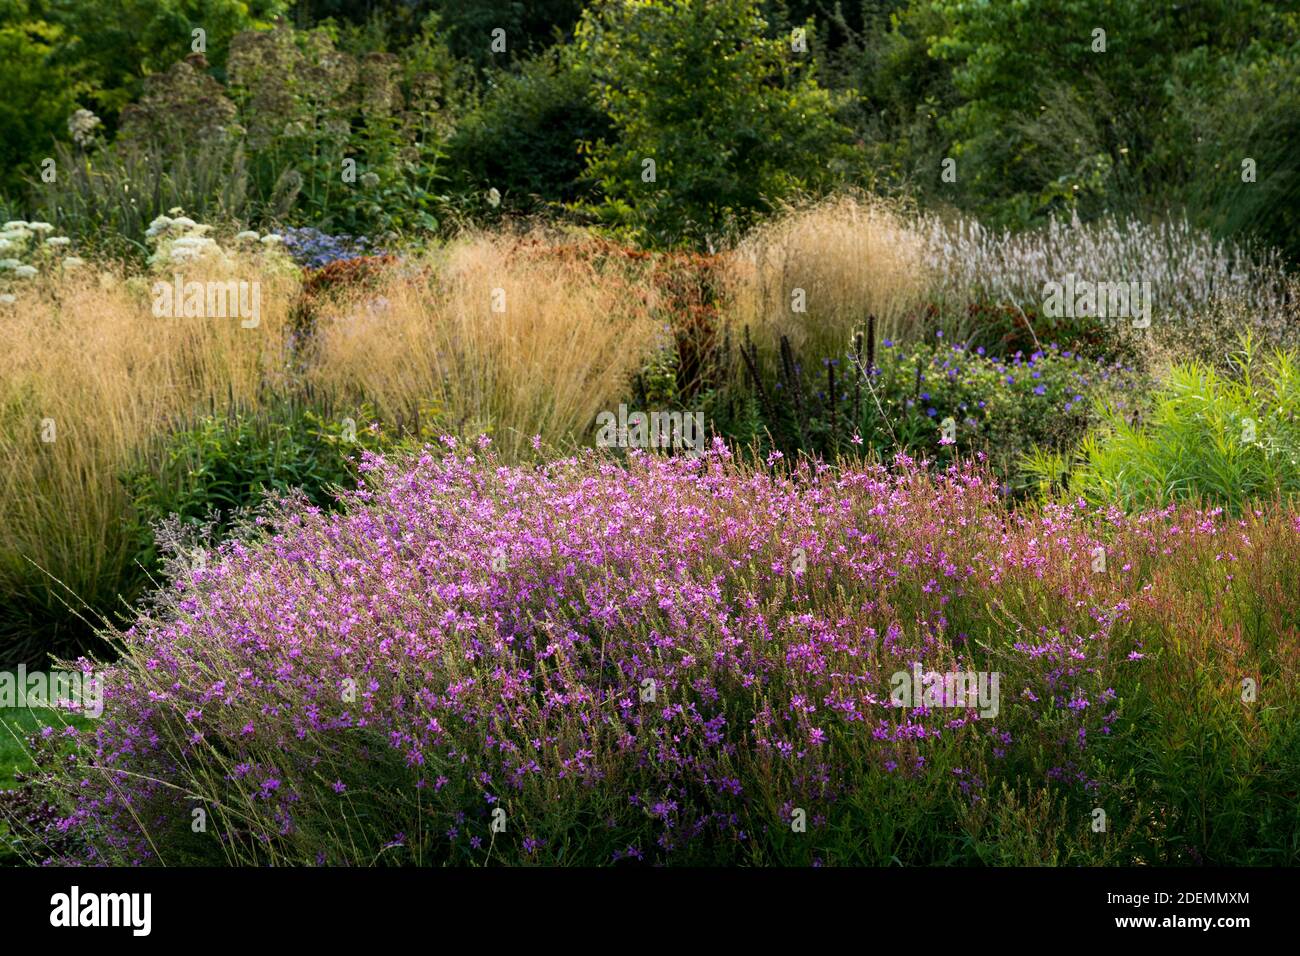 Lythrum virgatum 'Swirl' and ornamental grasses Stock Photo